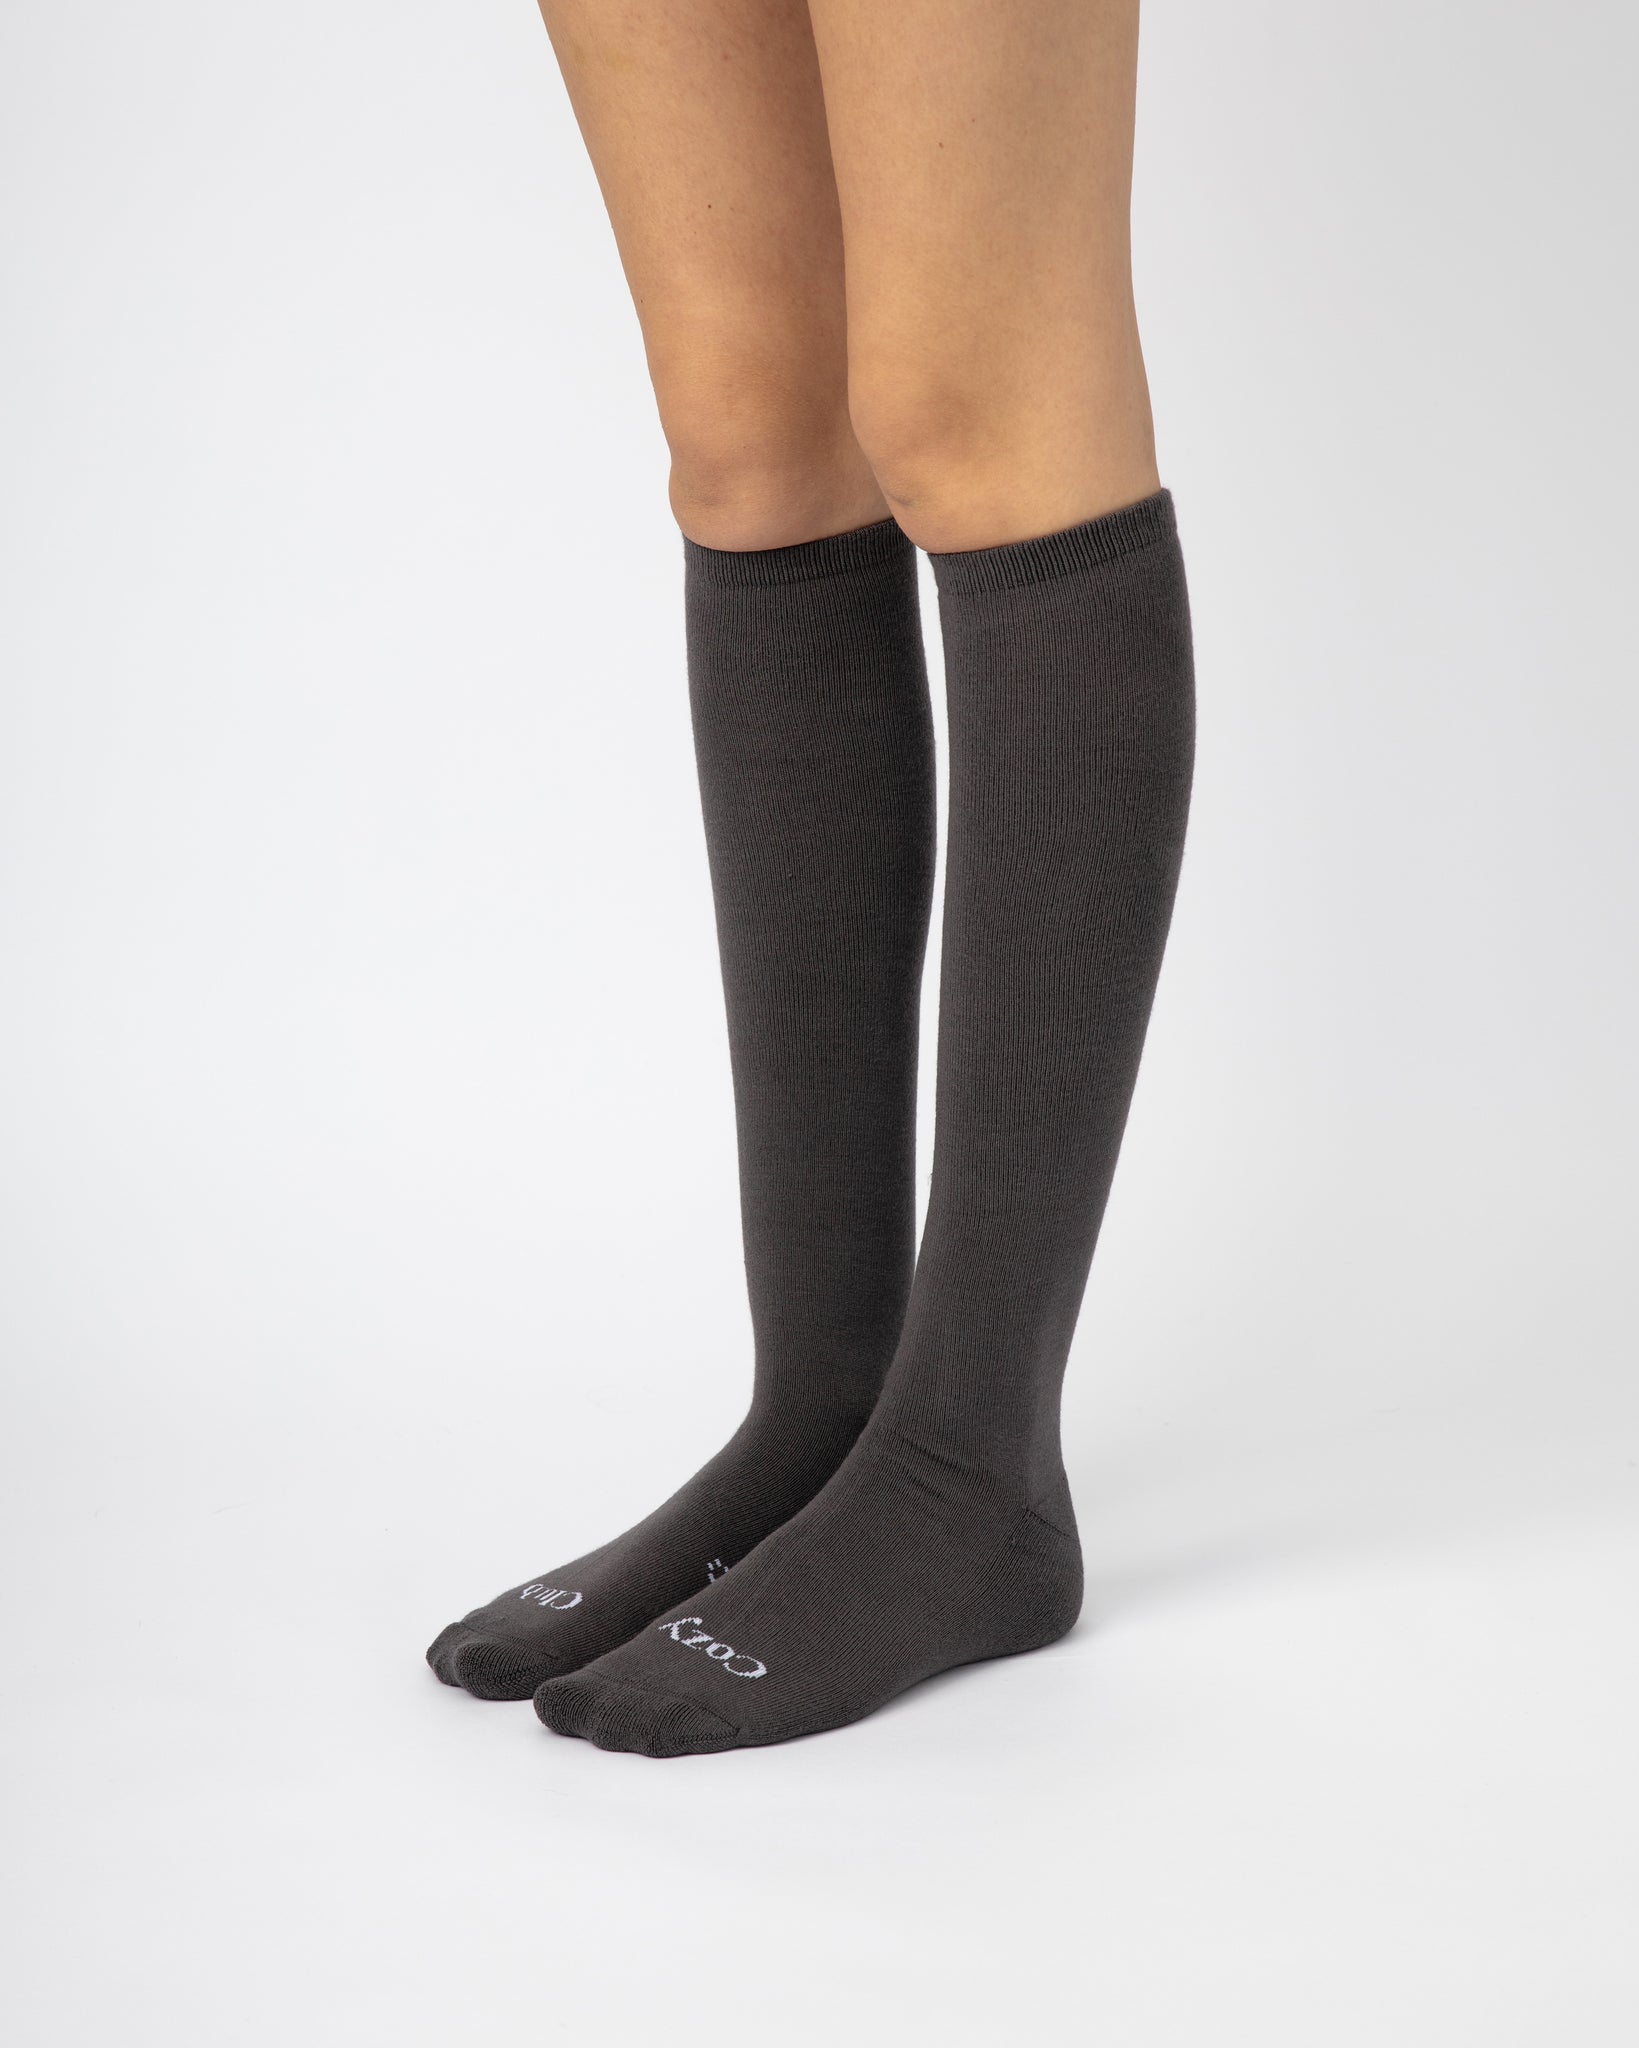 Everyday Knee-High Seamless Feel Sock (Adults) - Charcoal